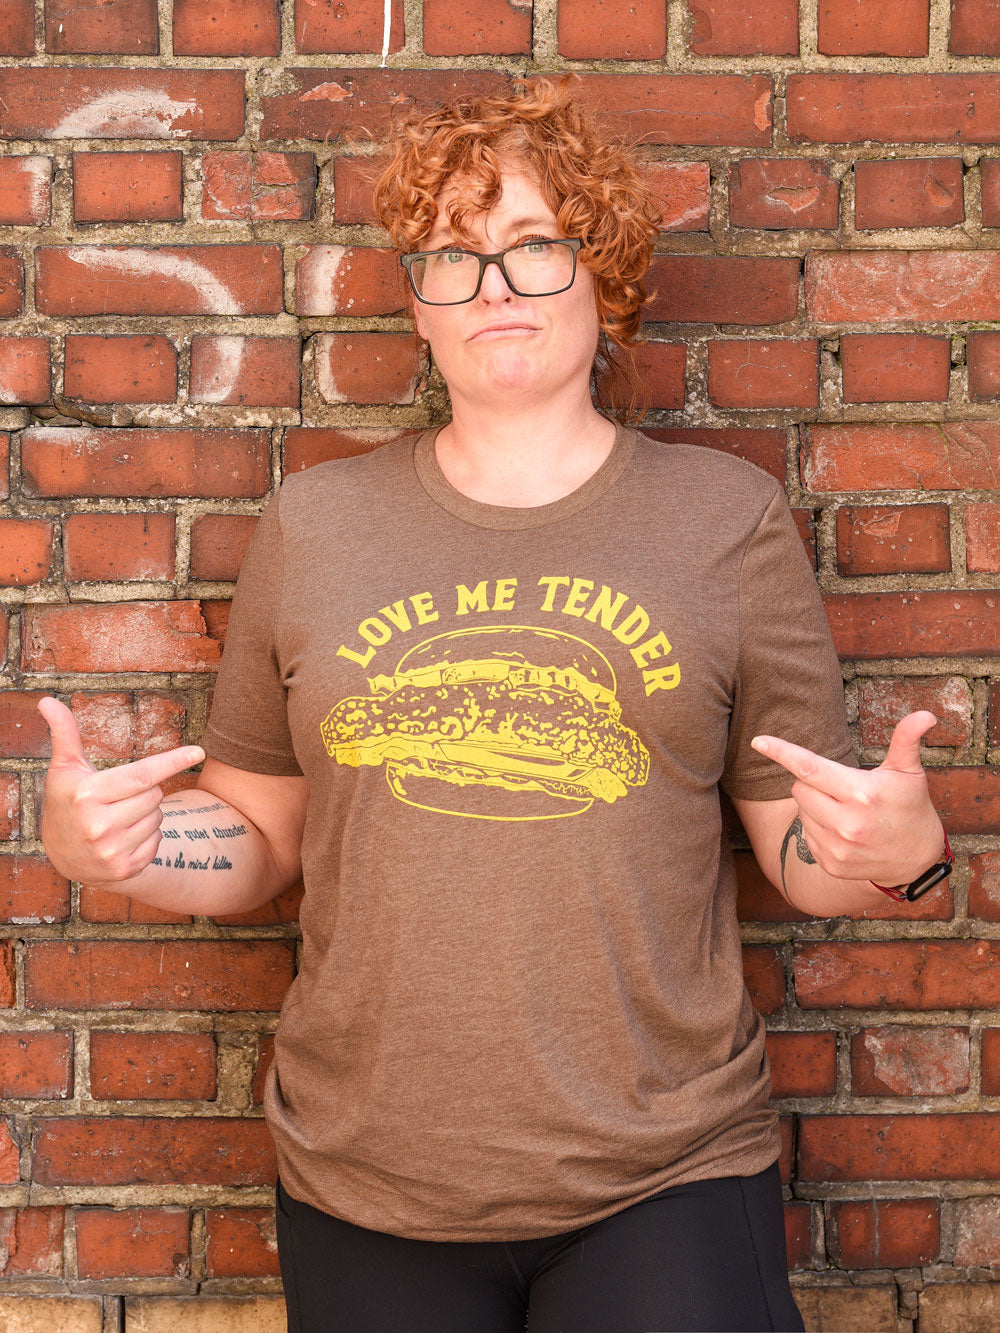 Love Me Tender (pork tenderloin sandwich) brown heather t-shirt on model in front of brick wall